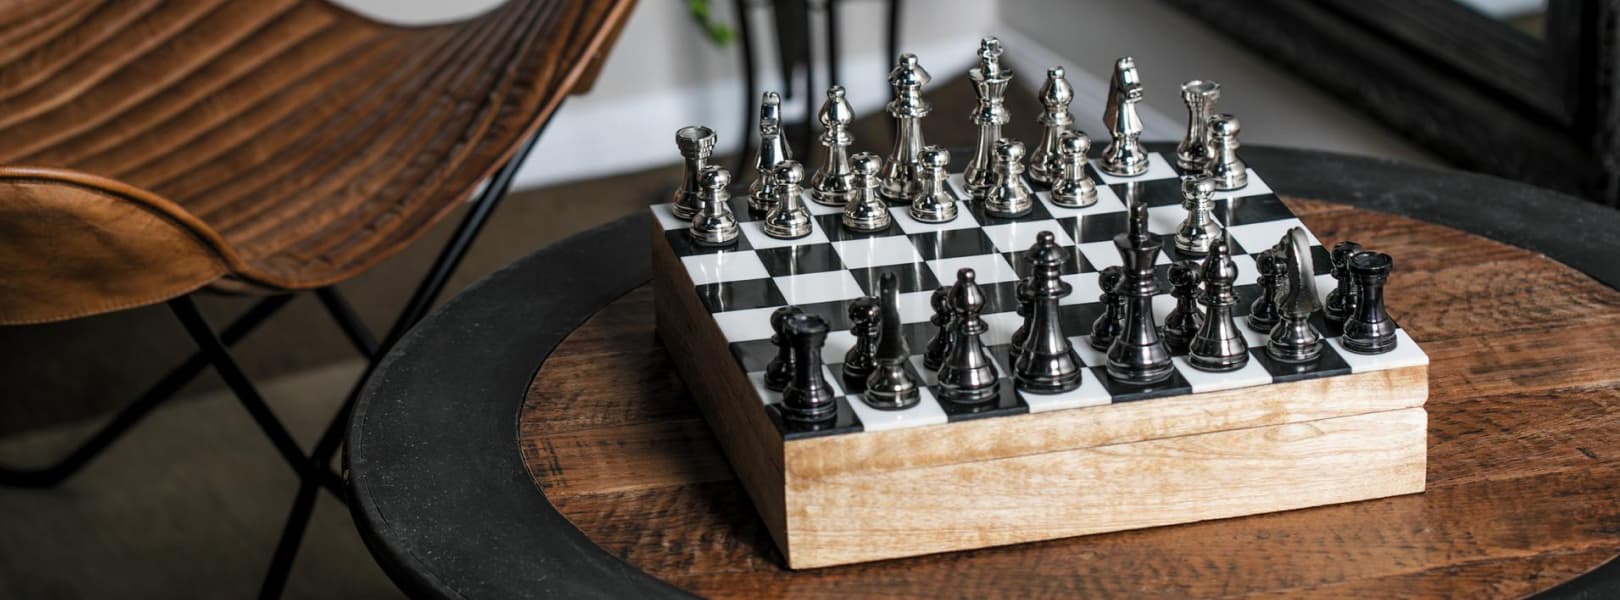 chess decor checkmate